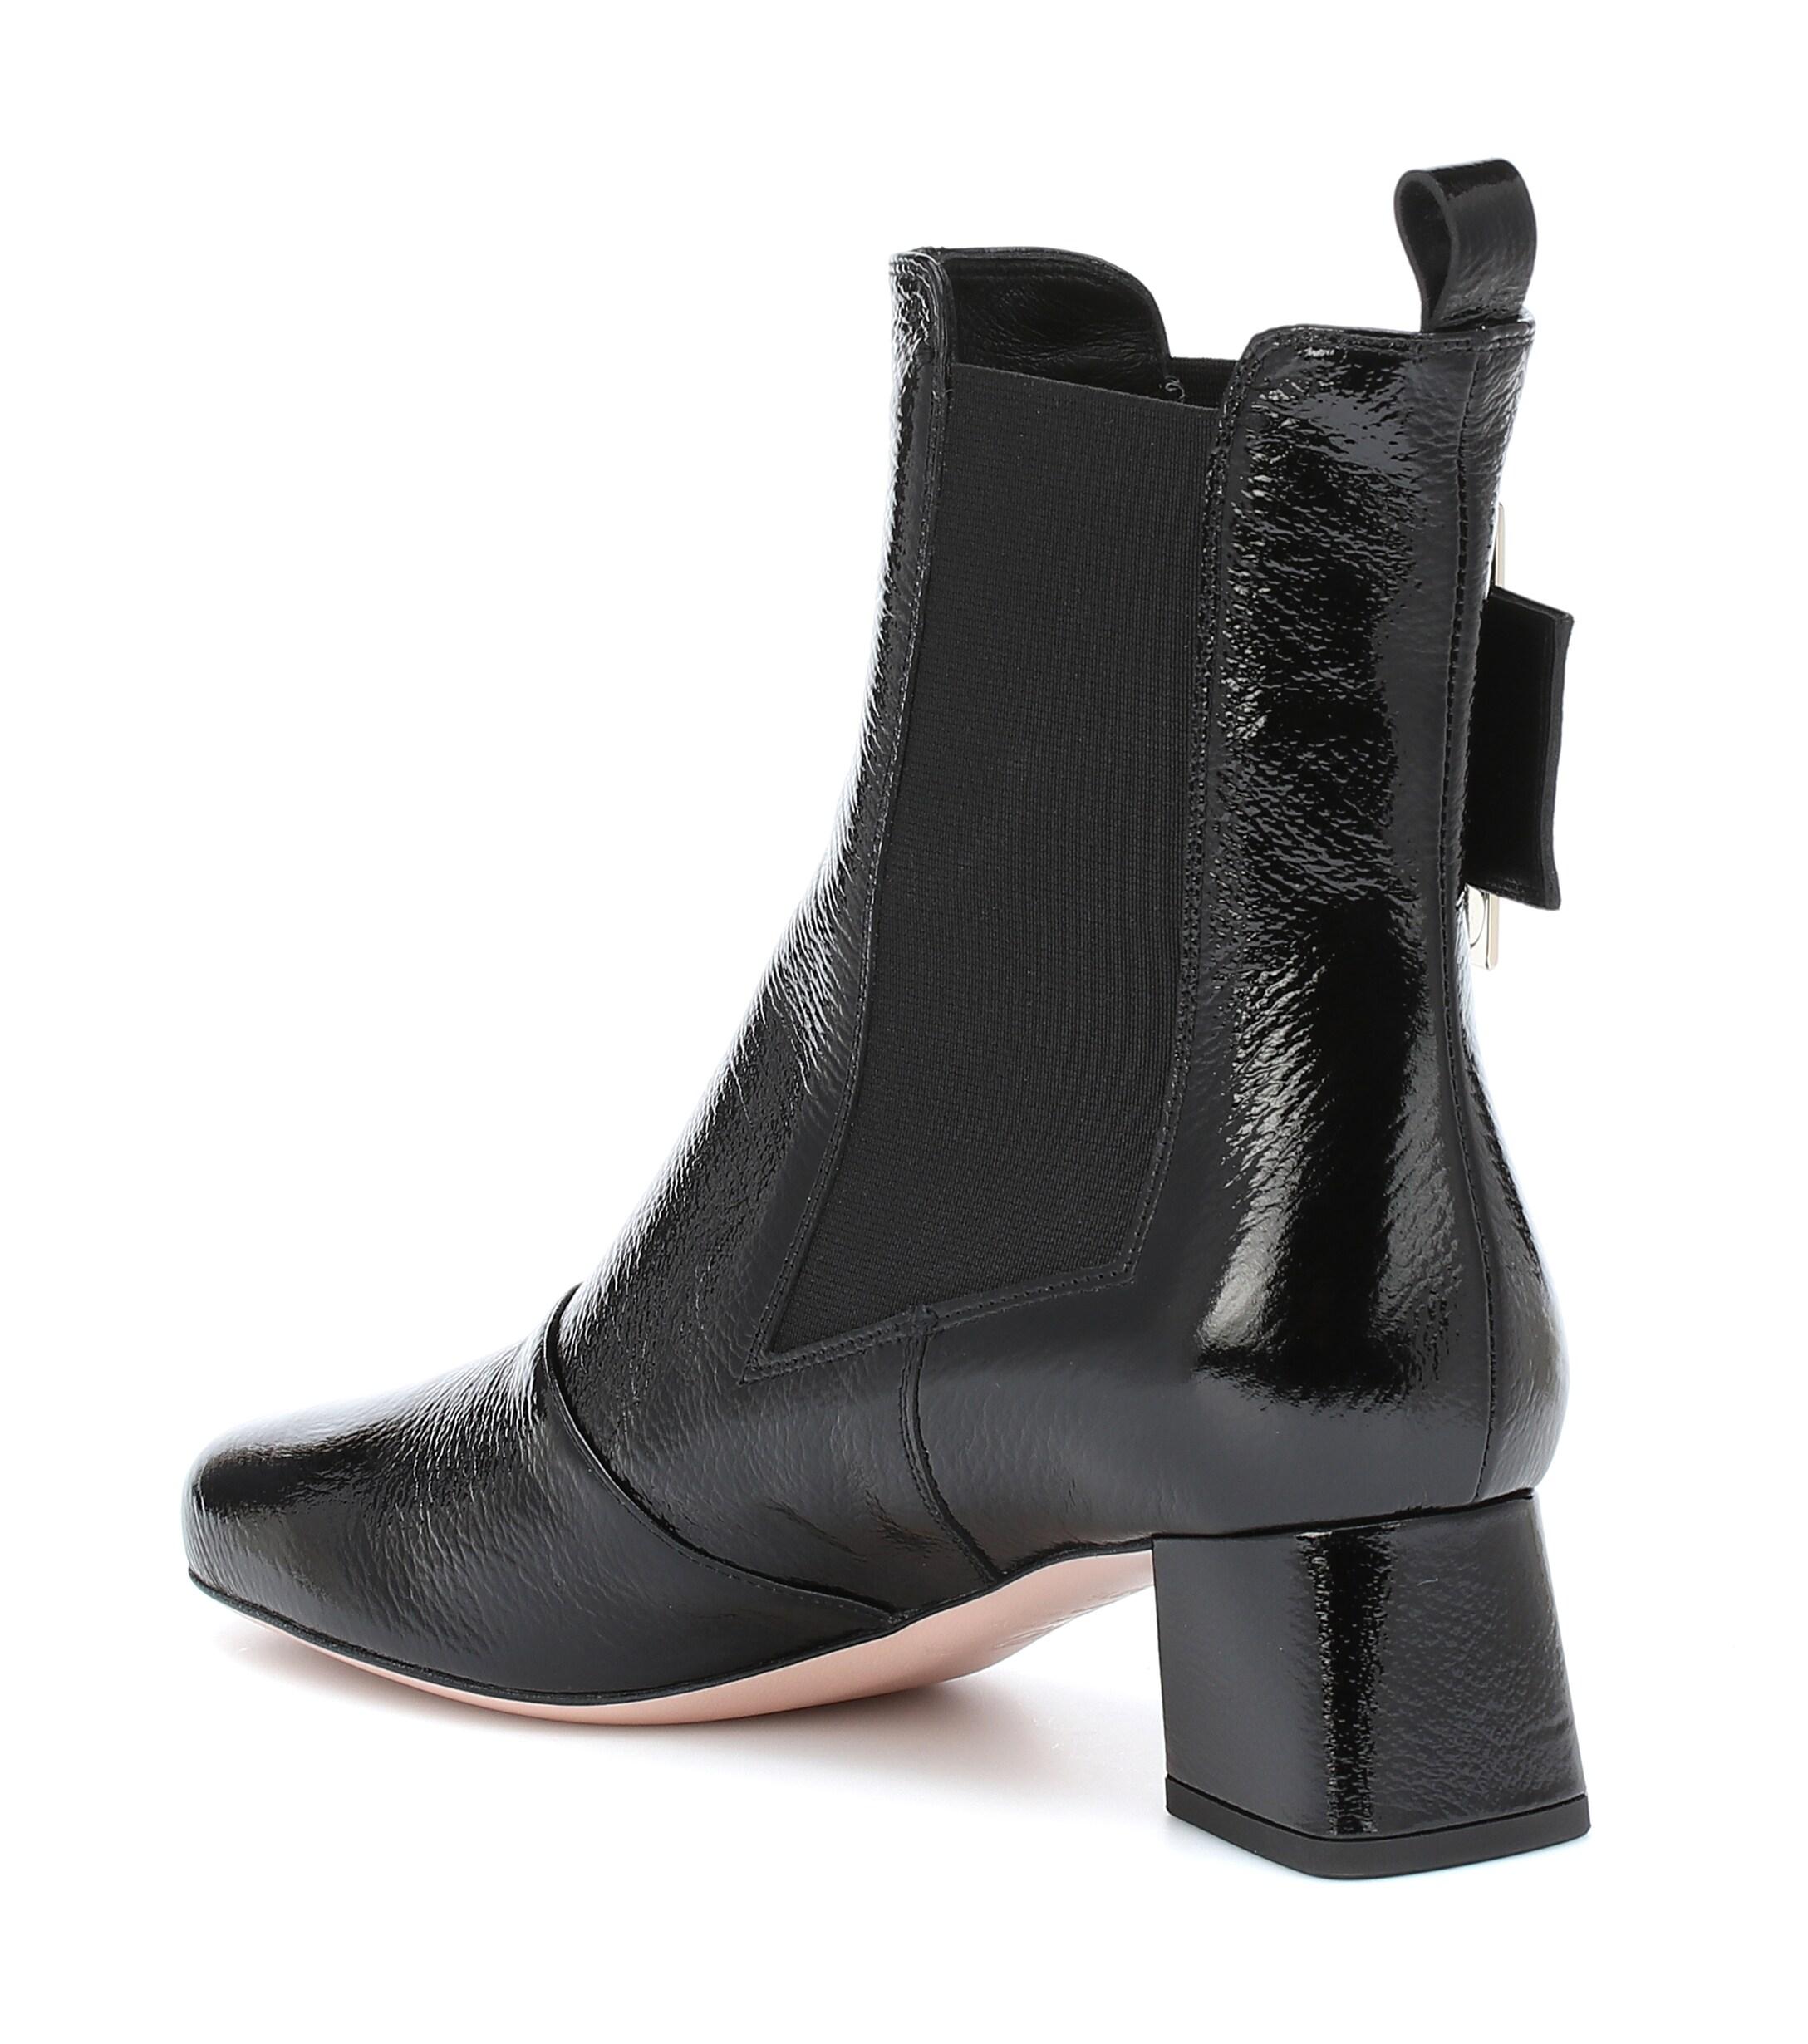 Roger Vivier Très Vivier Patent Leather Ankle Boots in Black | Lyst